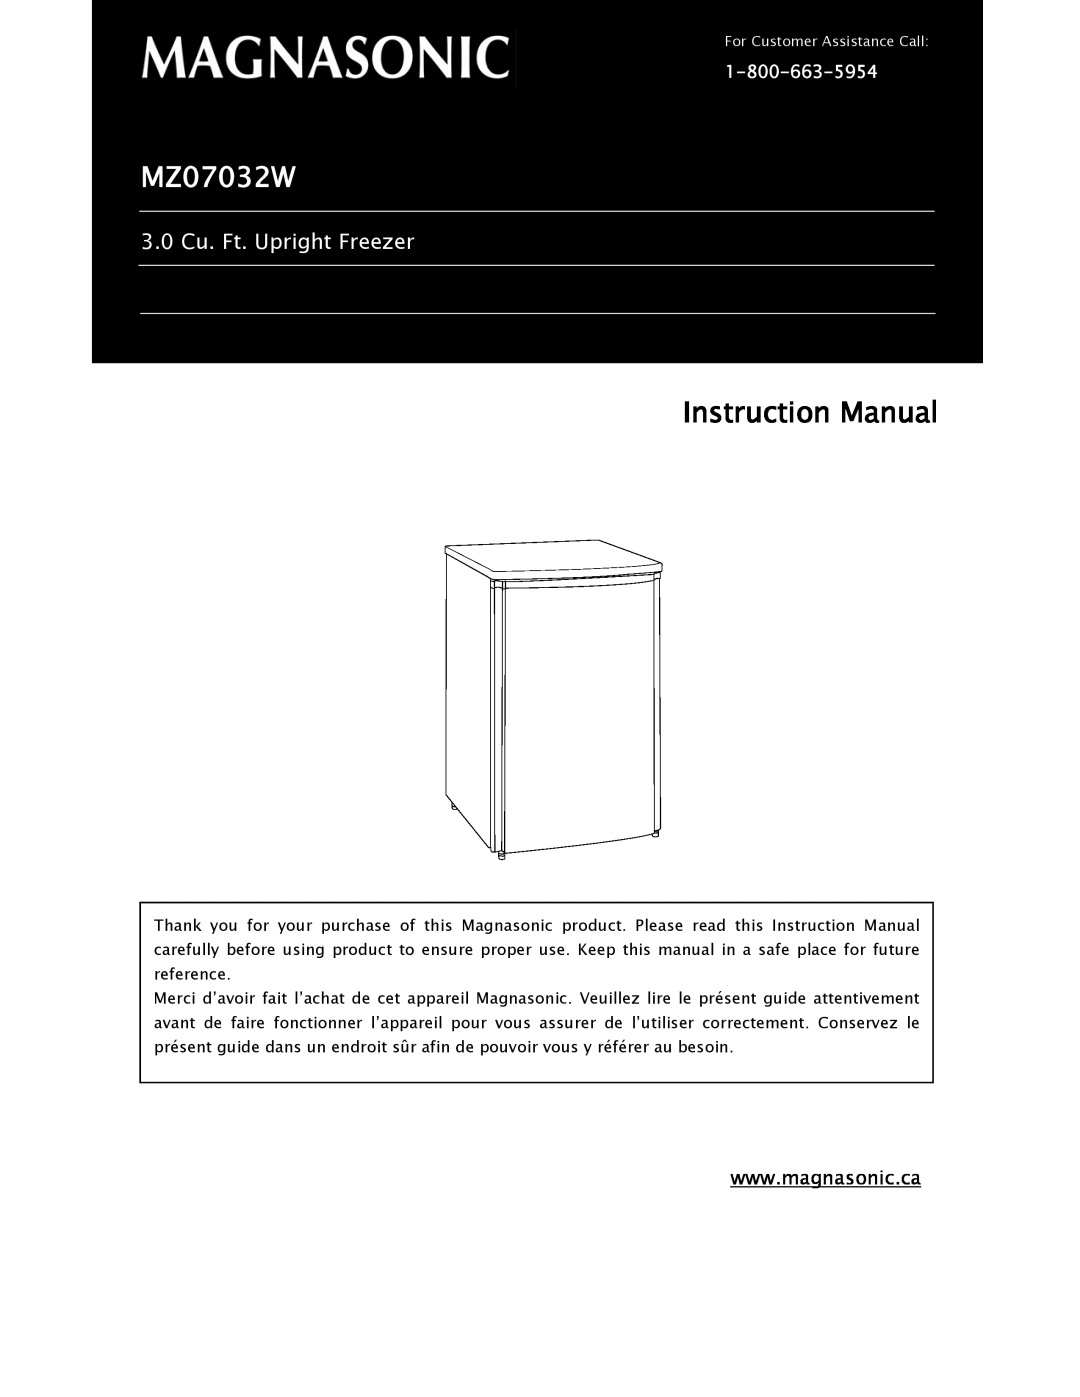 Magnasonic MZ07032W instruction manual 3.0 Cu. Ft. Upright Freezer 